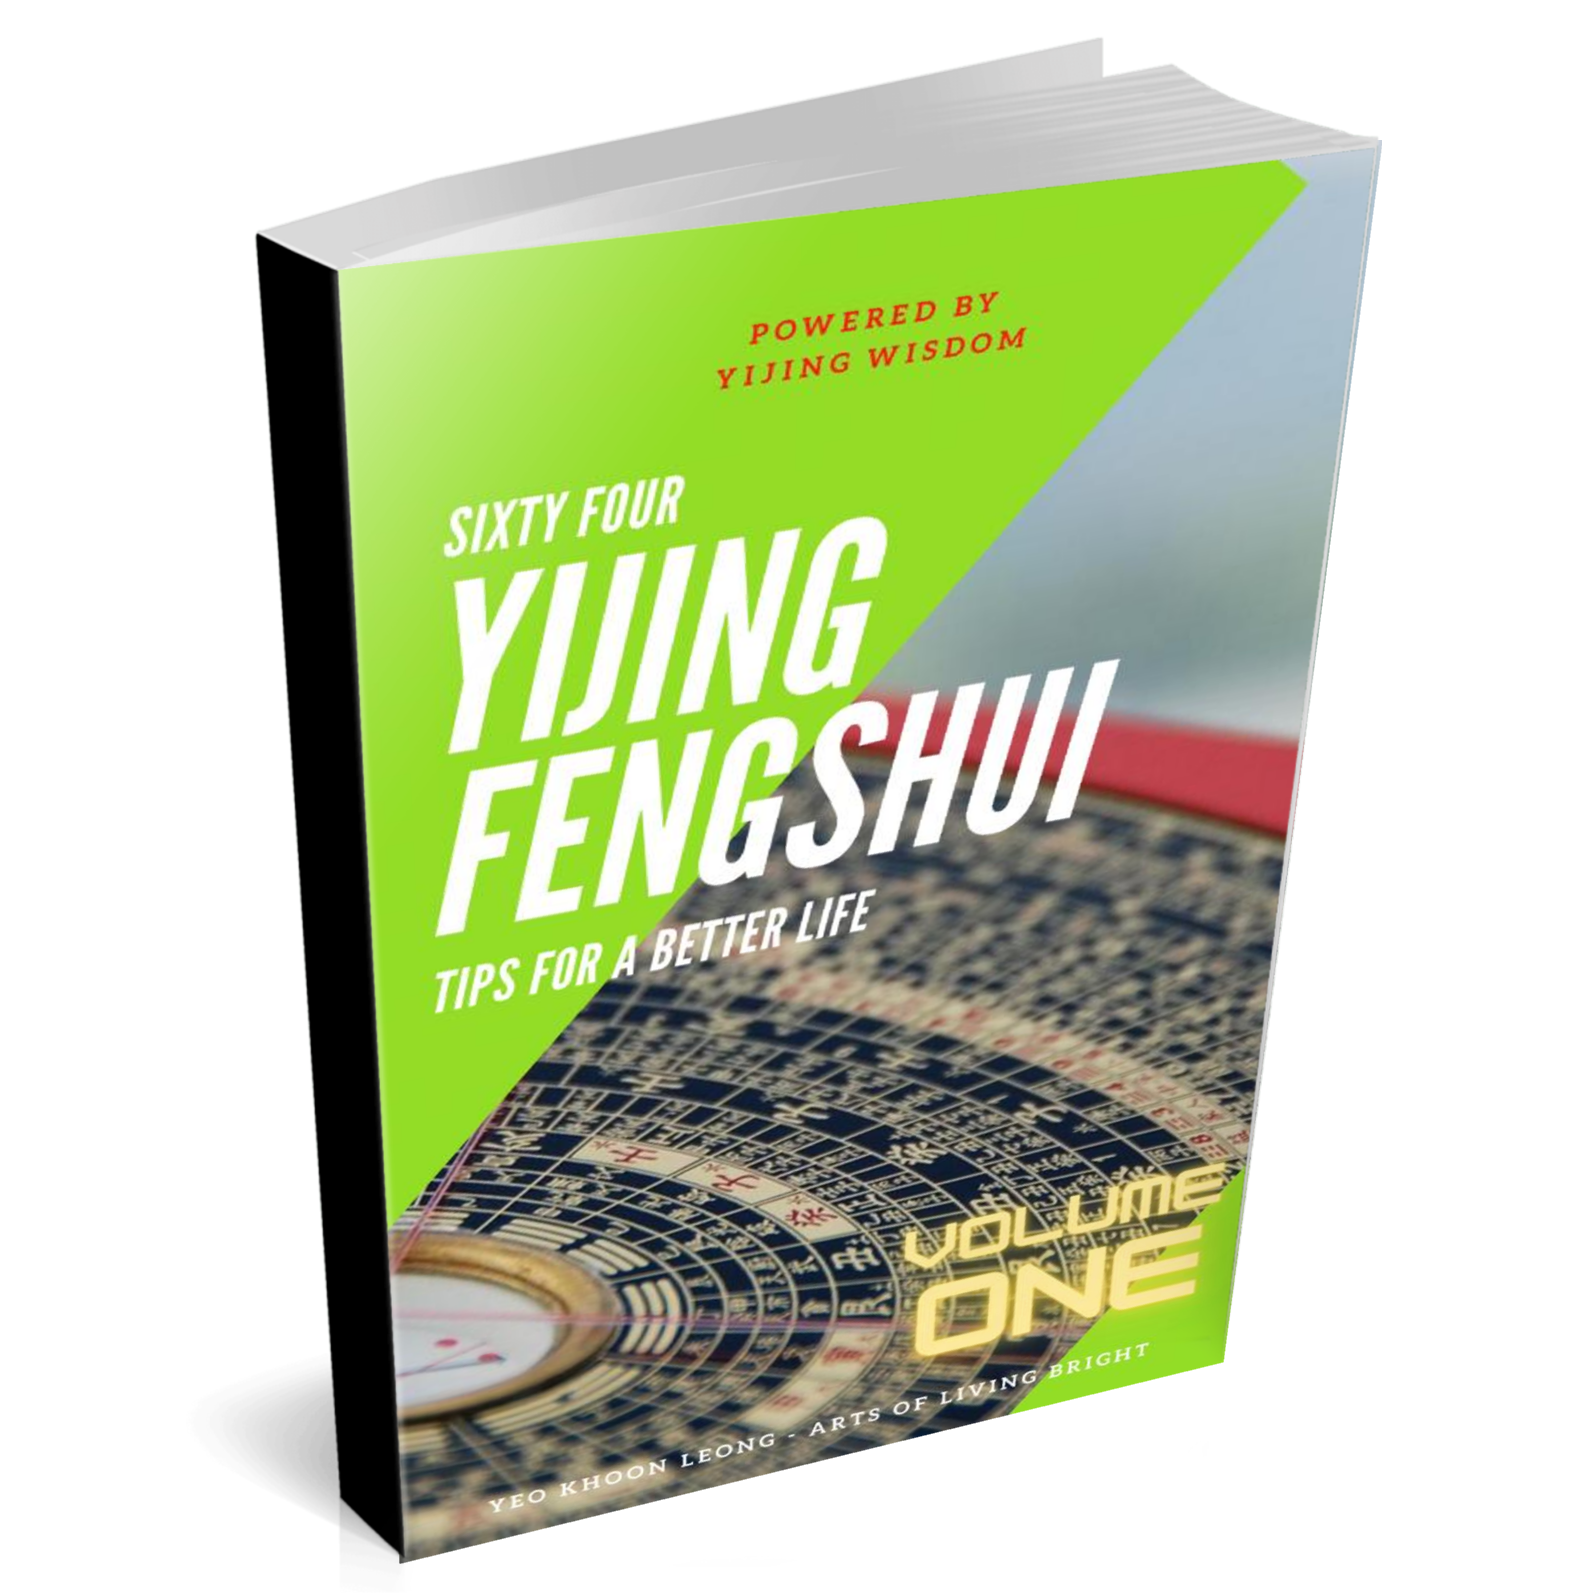 64 Yijing Fengshui Tips For A Better Life